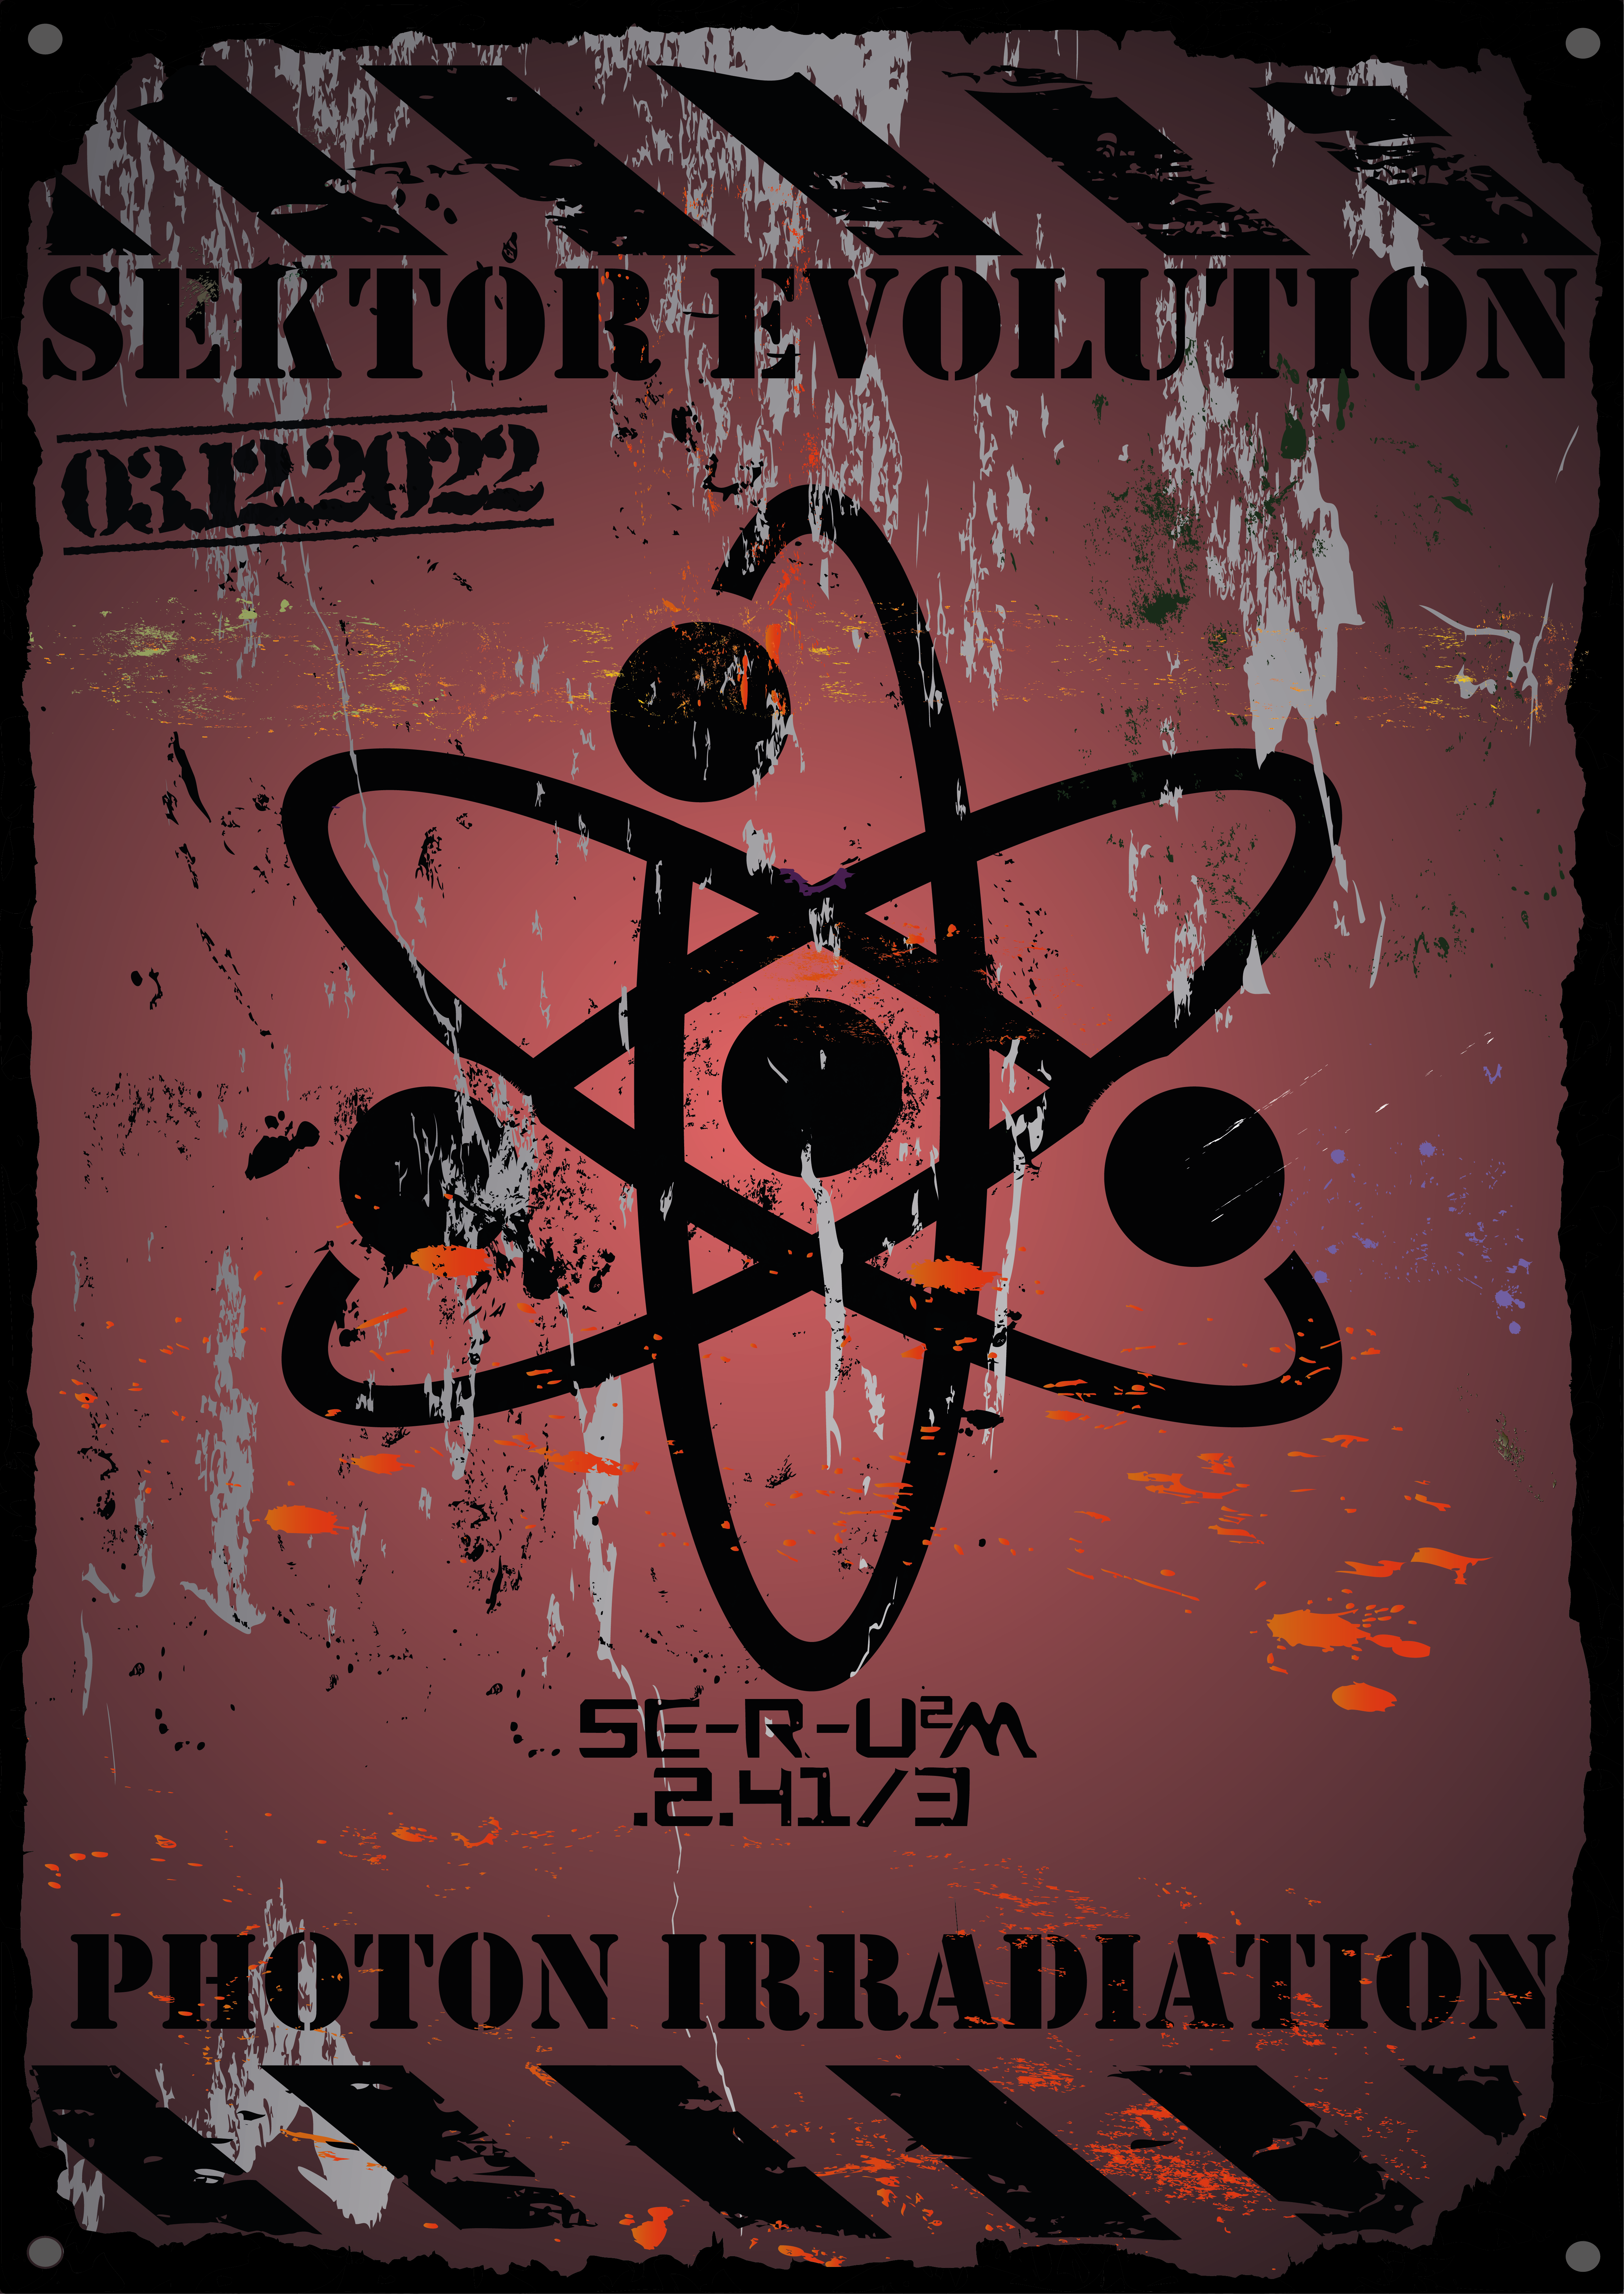 SE-R-u²m.2.41/3 – Photon Irradiation